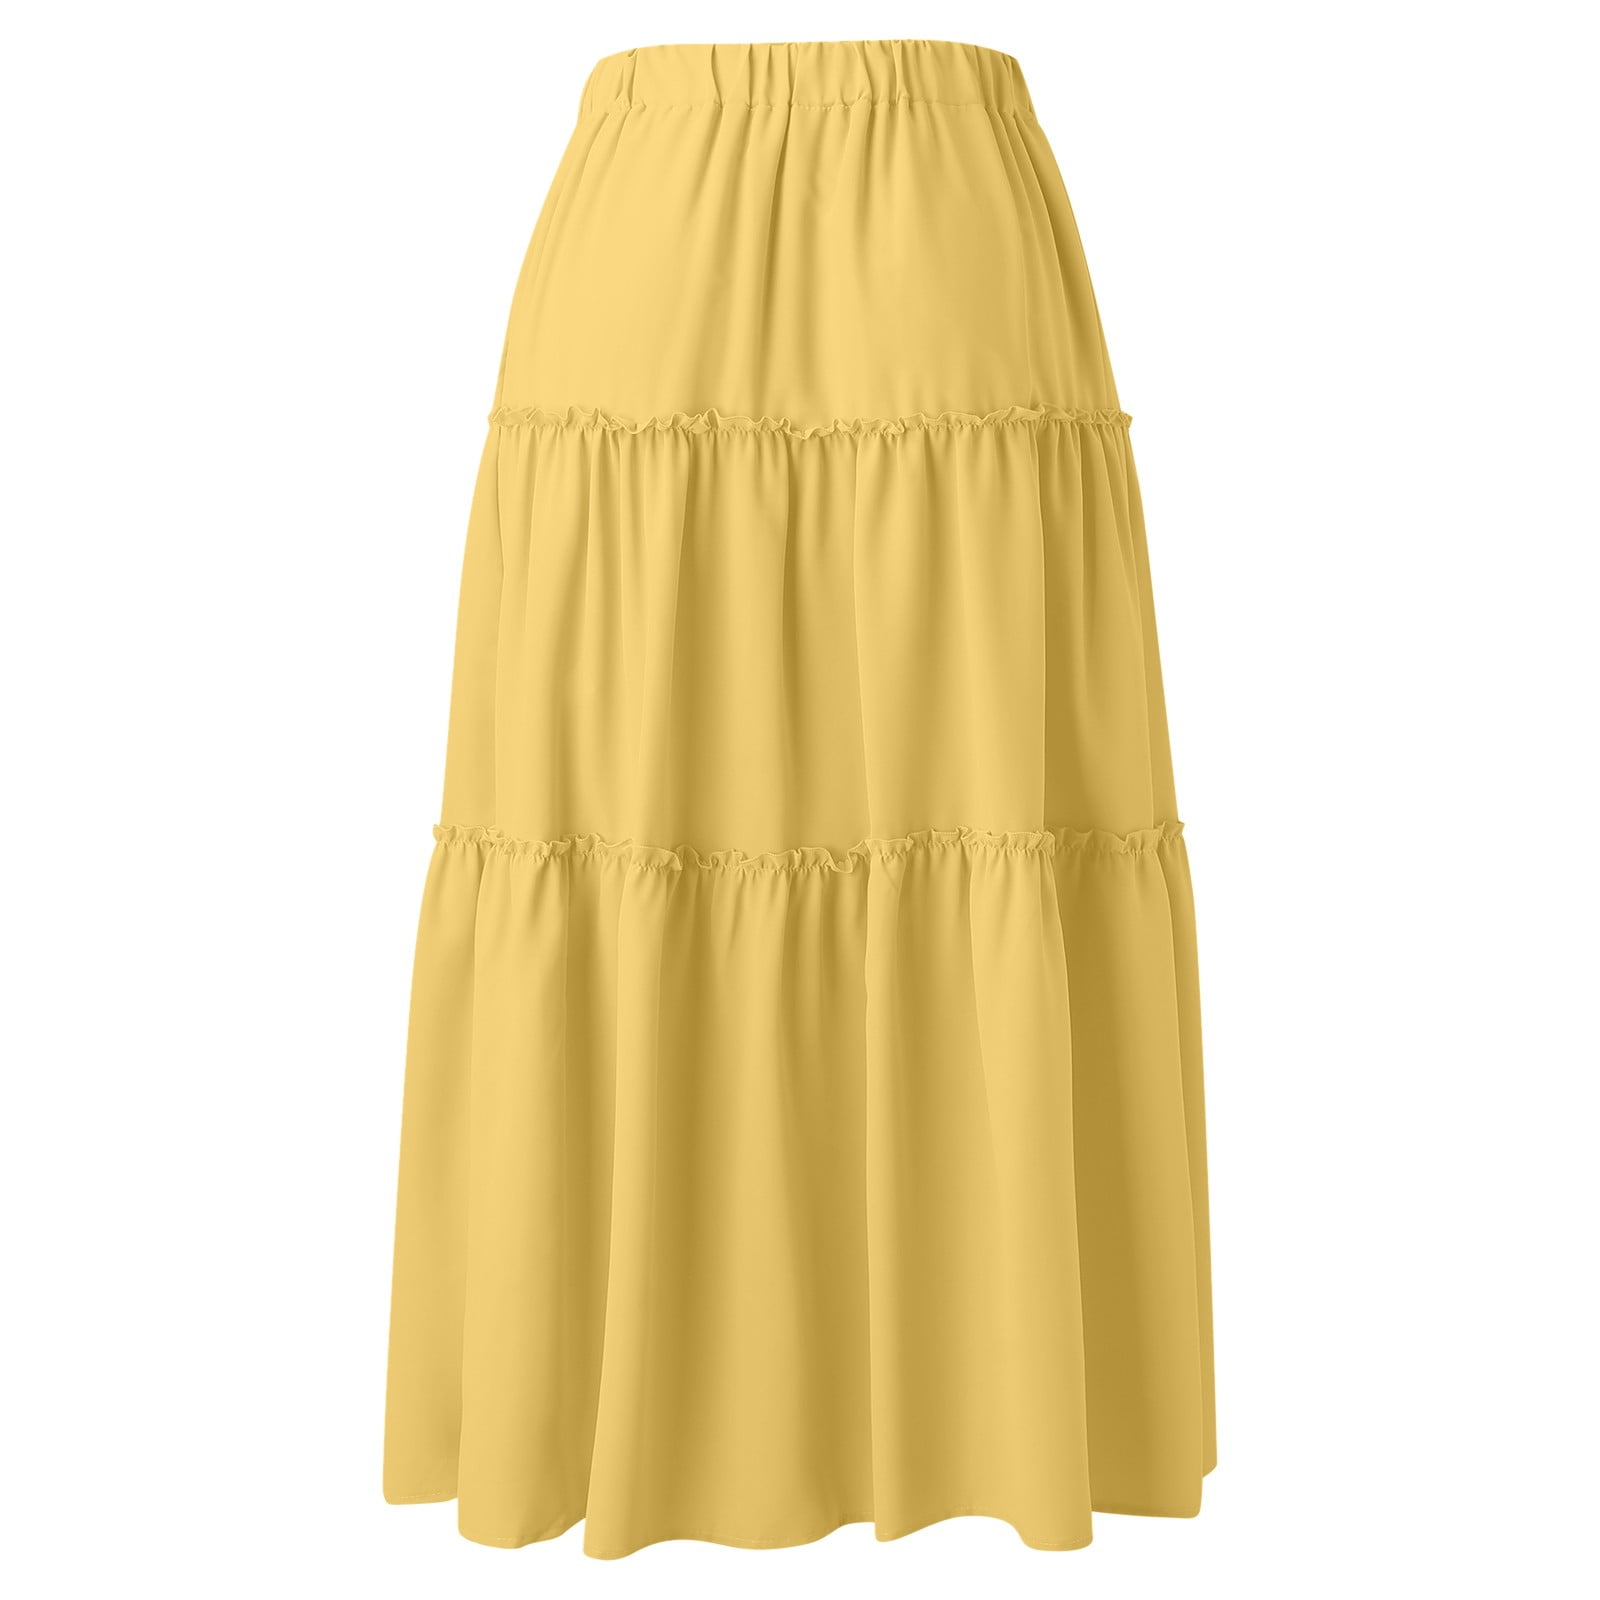 eczipvz Skirts for Women Trendy Womens Casual Plaid Belt Skirt Splice ...